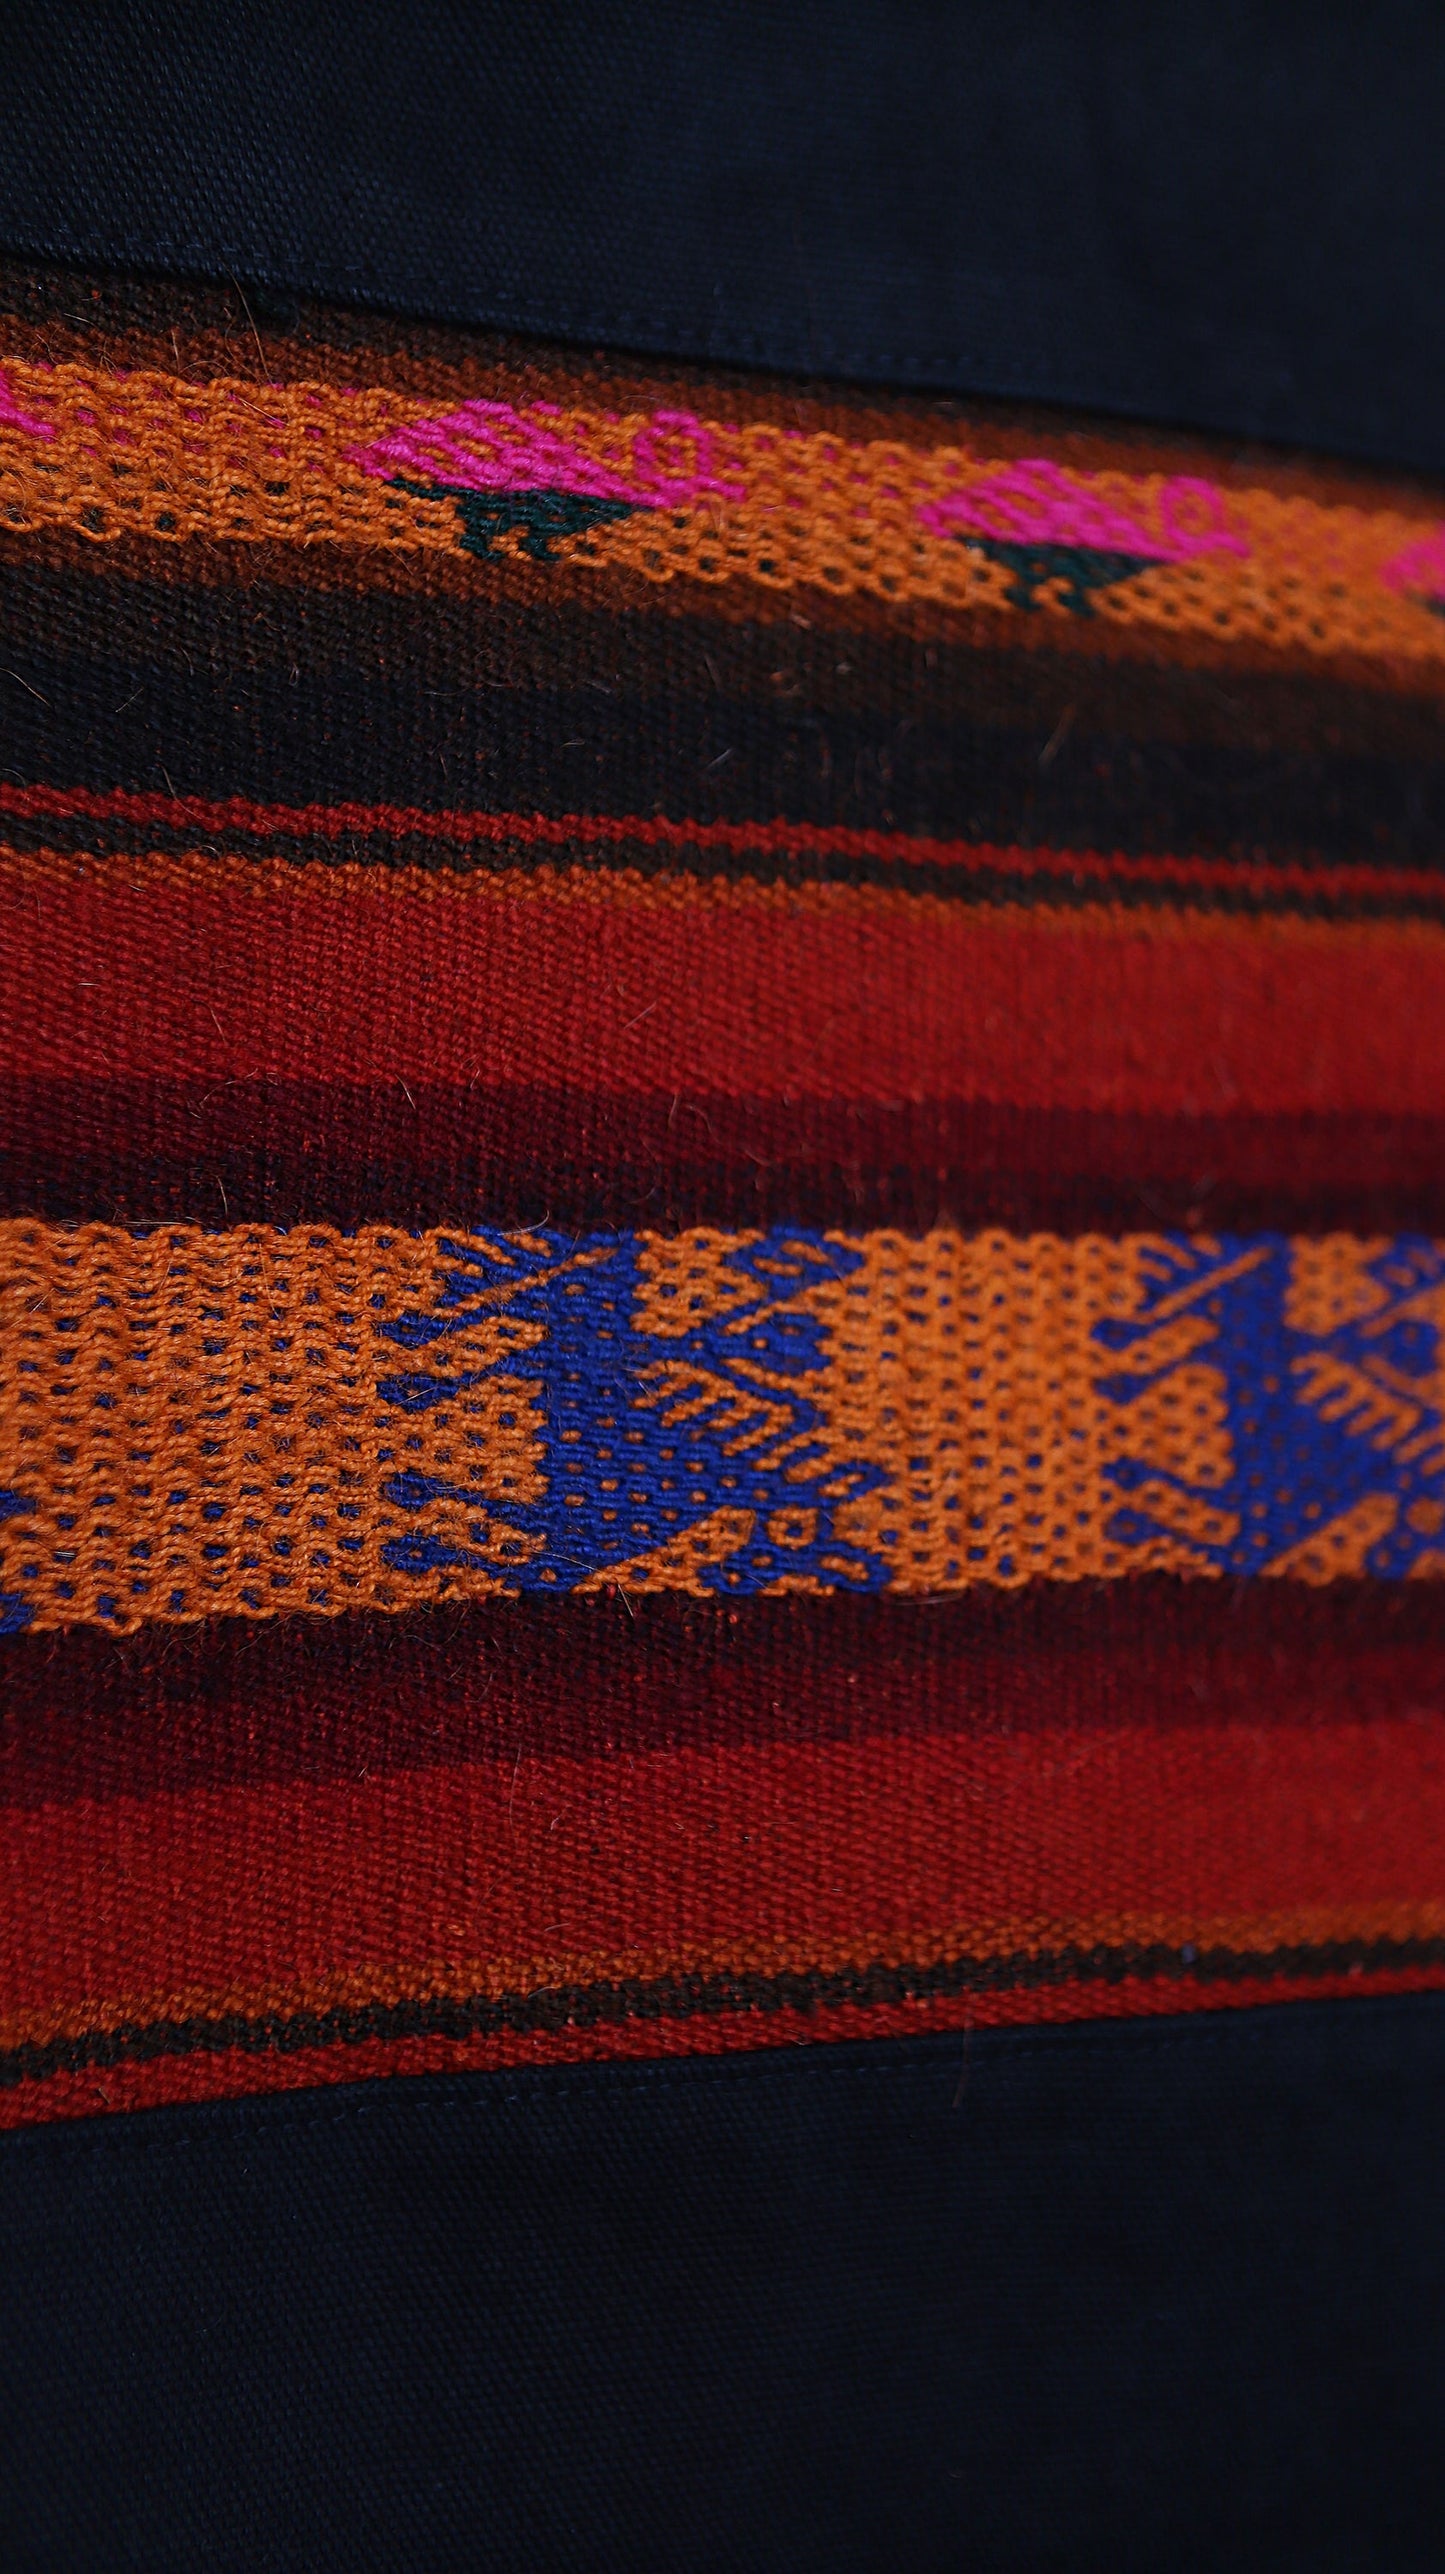 Land R, Peruvian Made, Handwoven Matte Black Tote Bags, Sunset